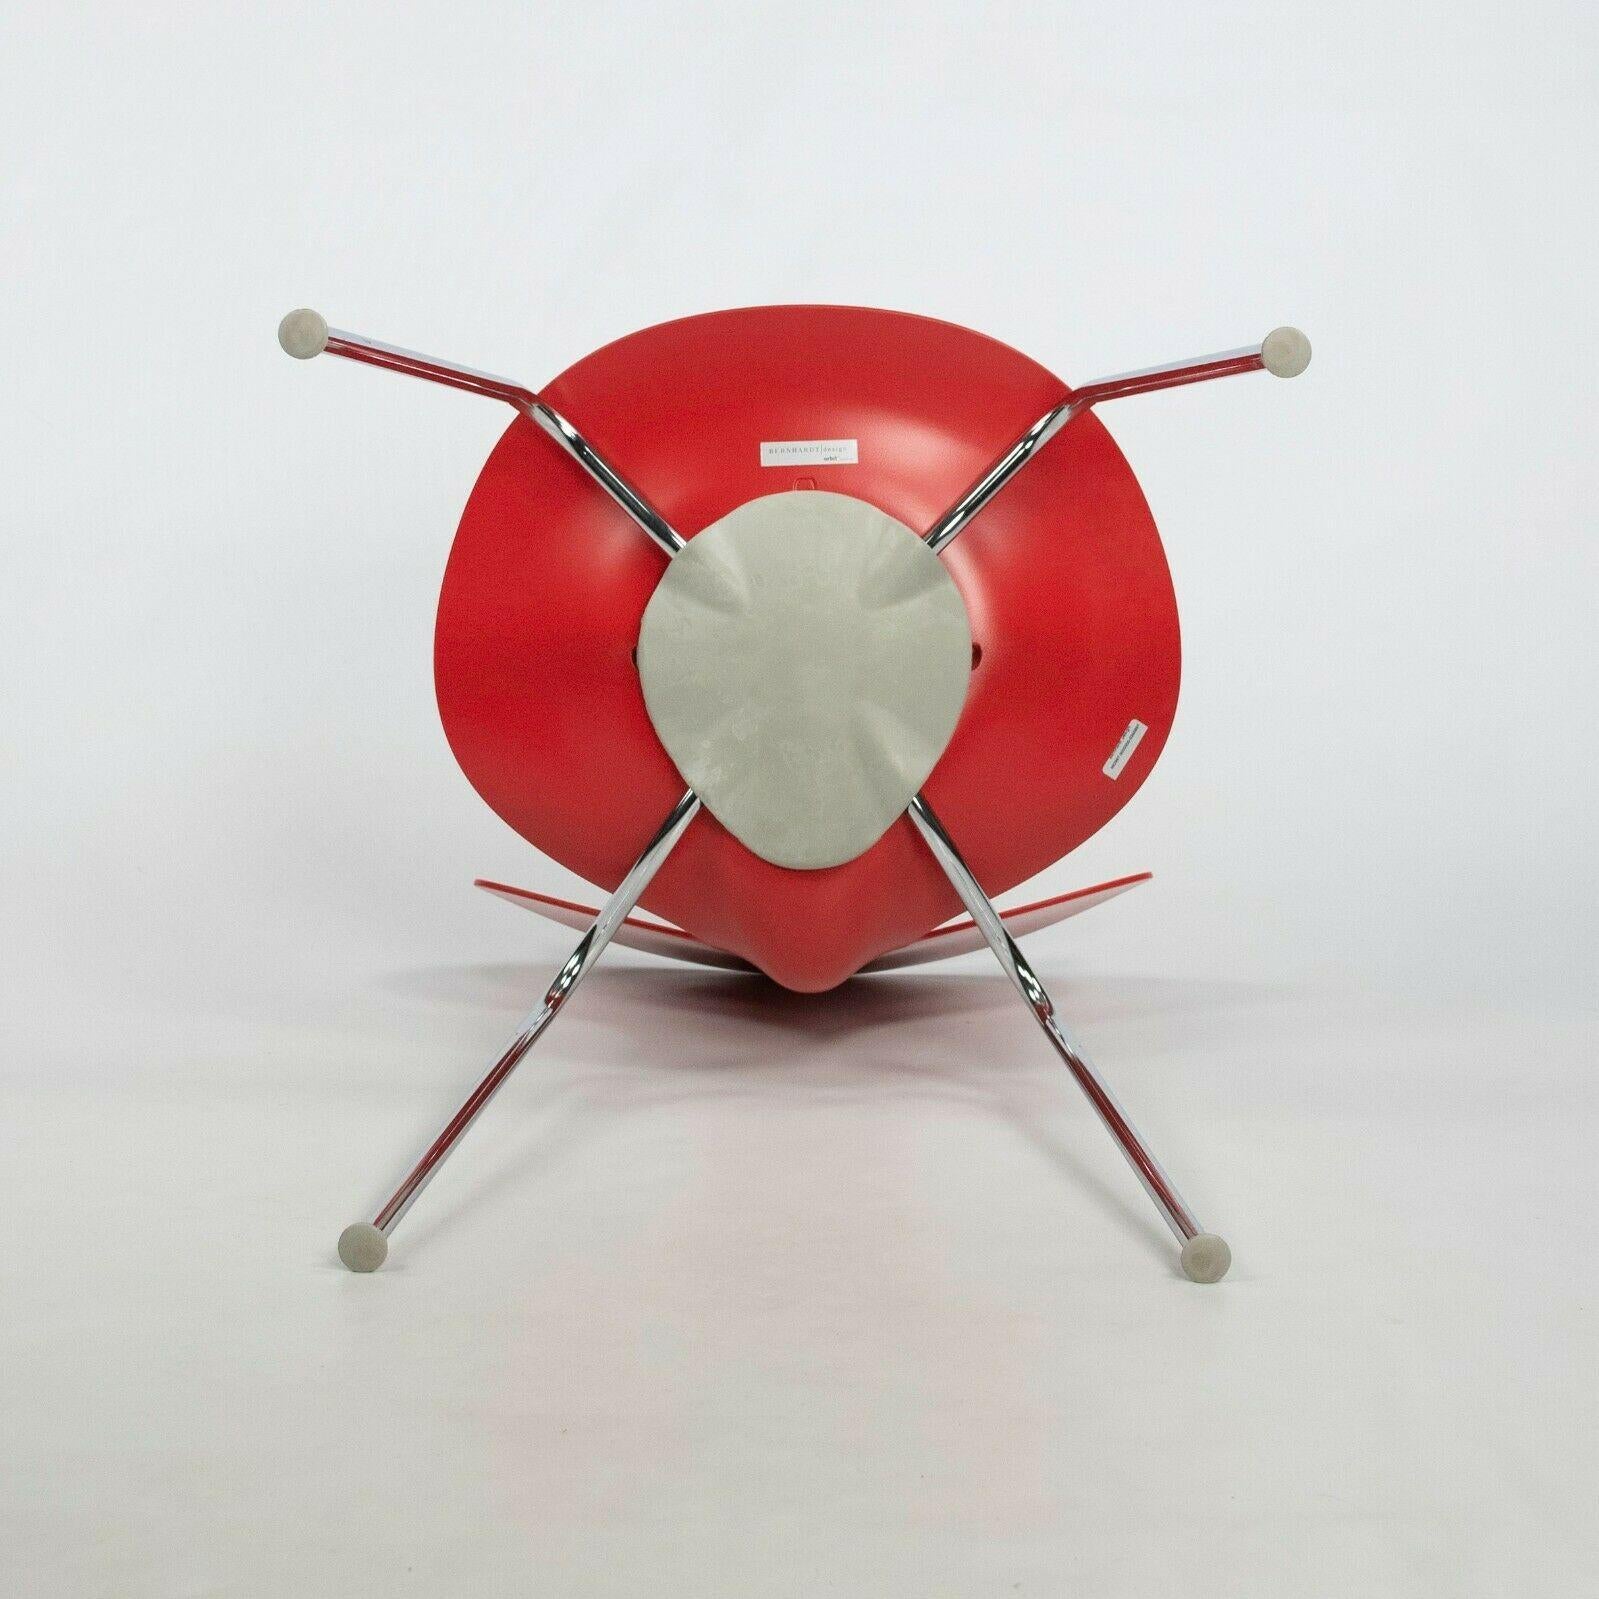 Contemporary 2010s Ross Lovegrove Orbit Chair by Bernhardt Design in Red Plastic Chrome Legs For Sale